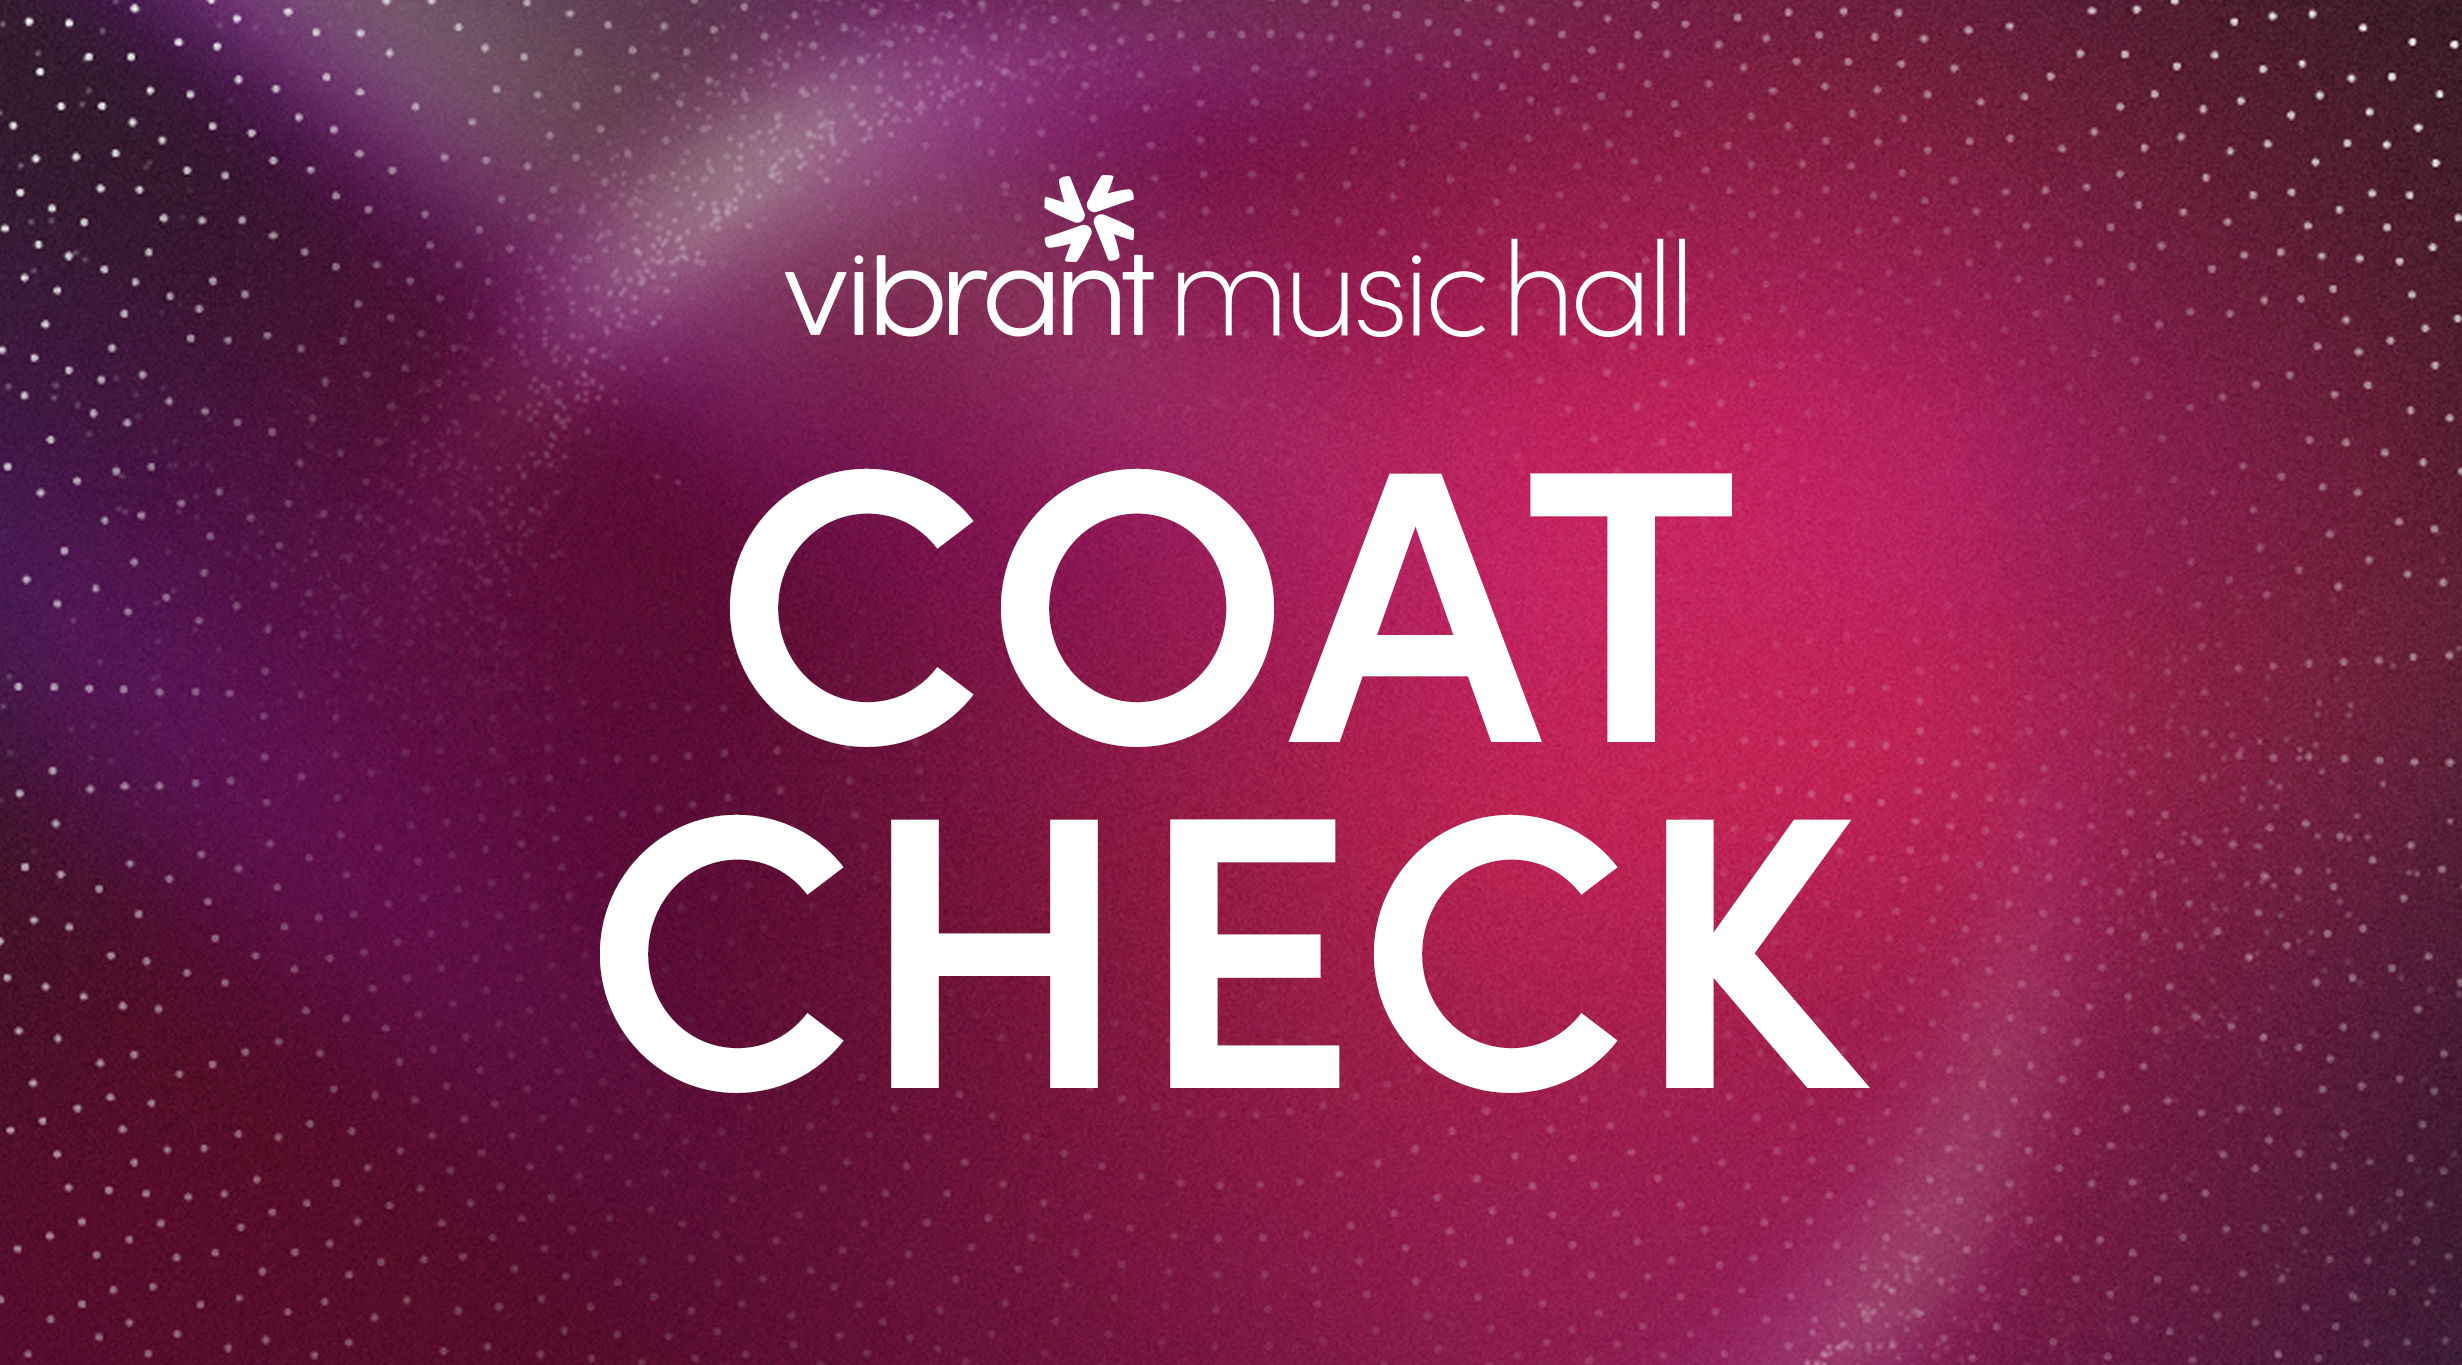 Vibrant Music Hall Guaranteed Coat Check presale information on freepresalepasswords.com